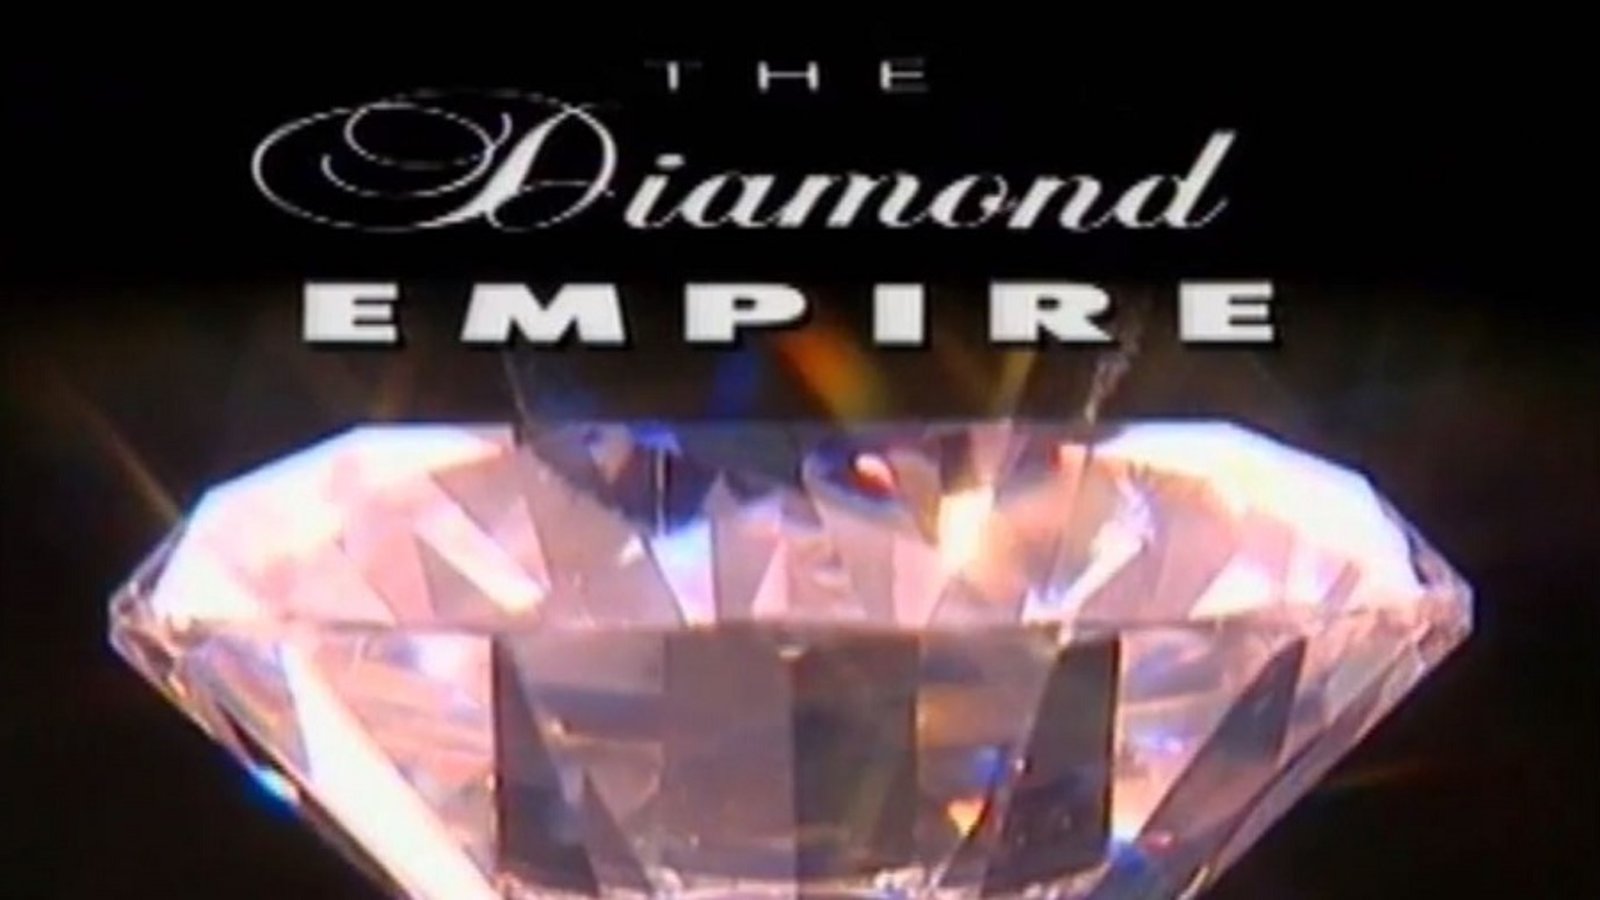 The Diamond Empire